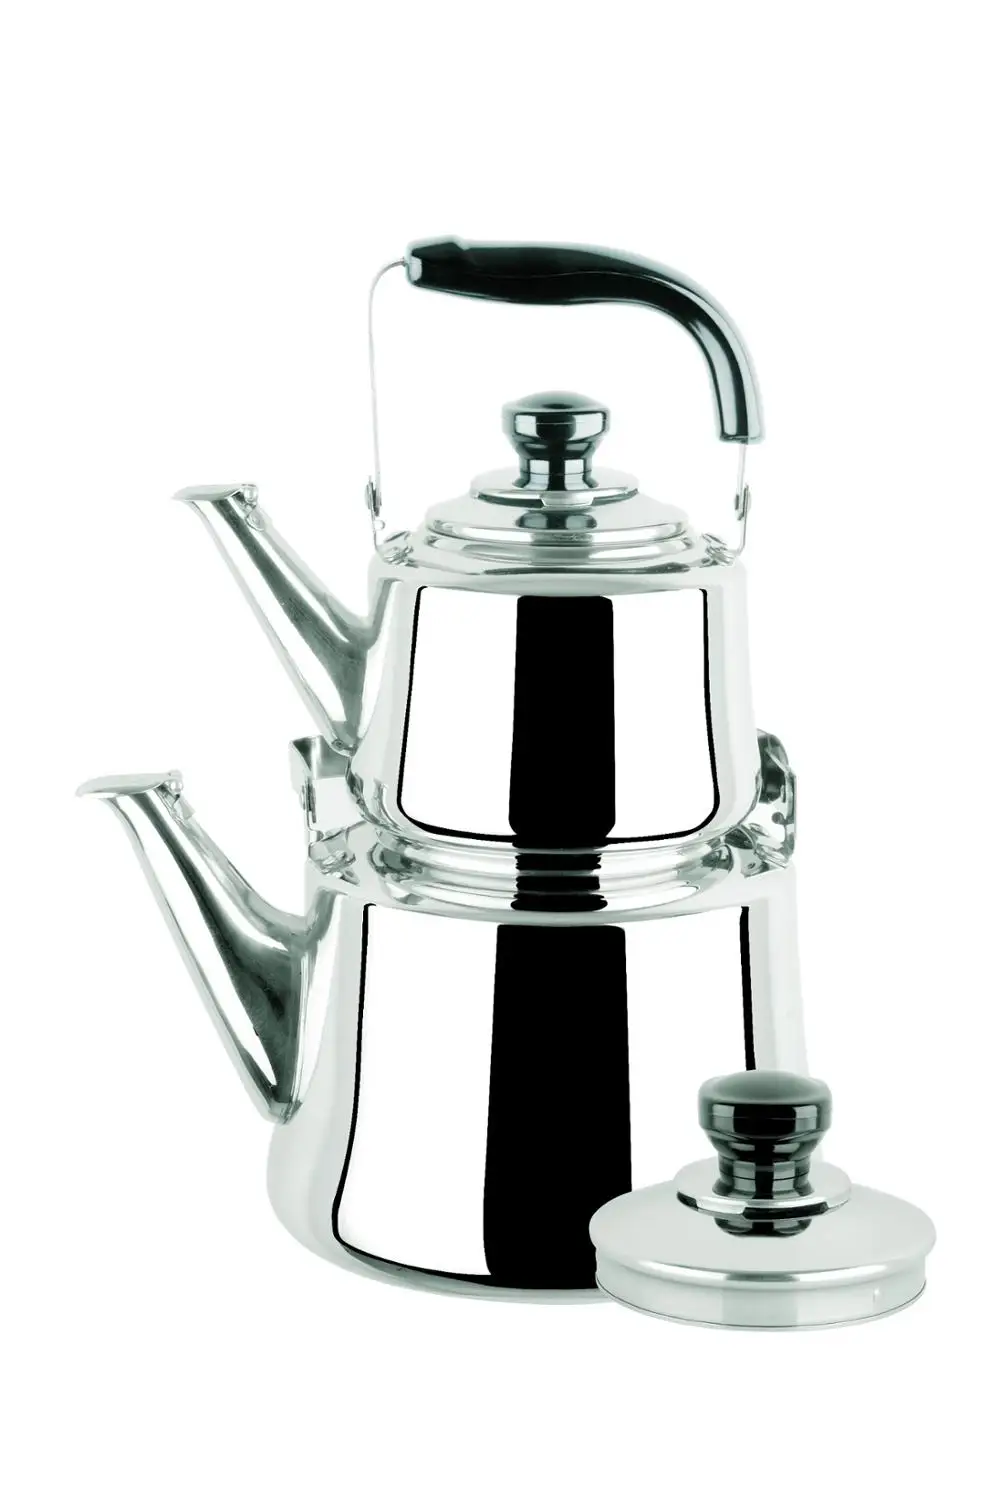 turkish double tea pot kettle set with handle infuser turkish double tea pot kettle set